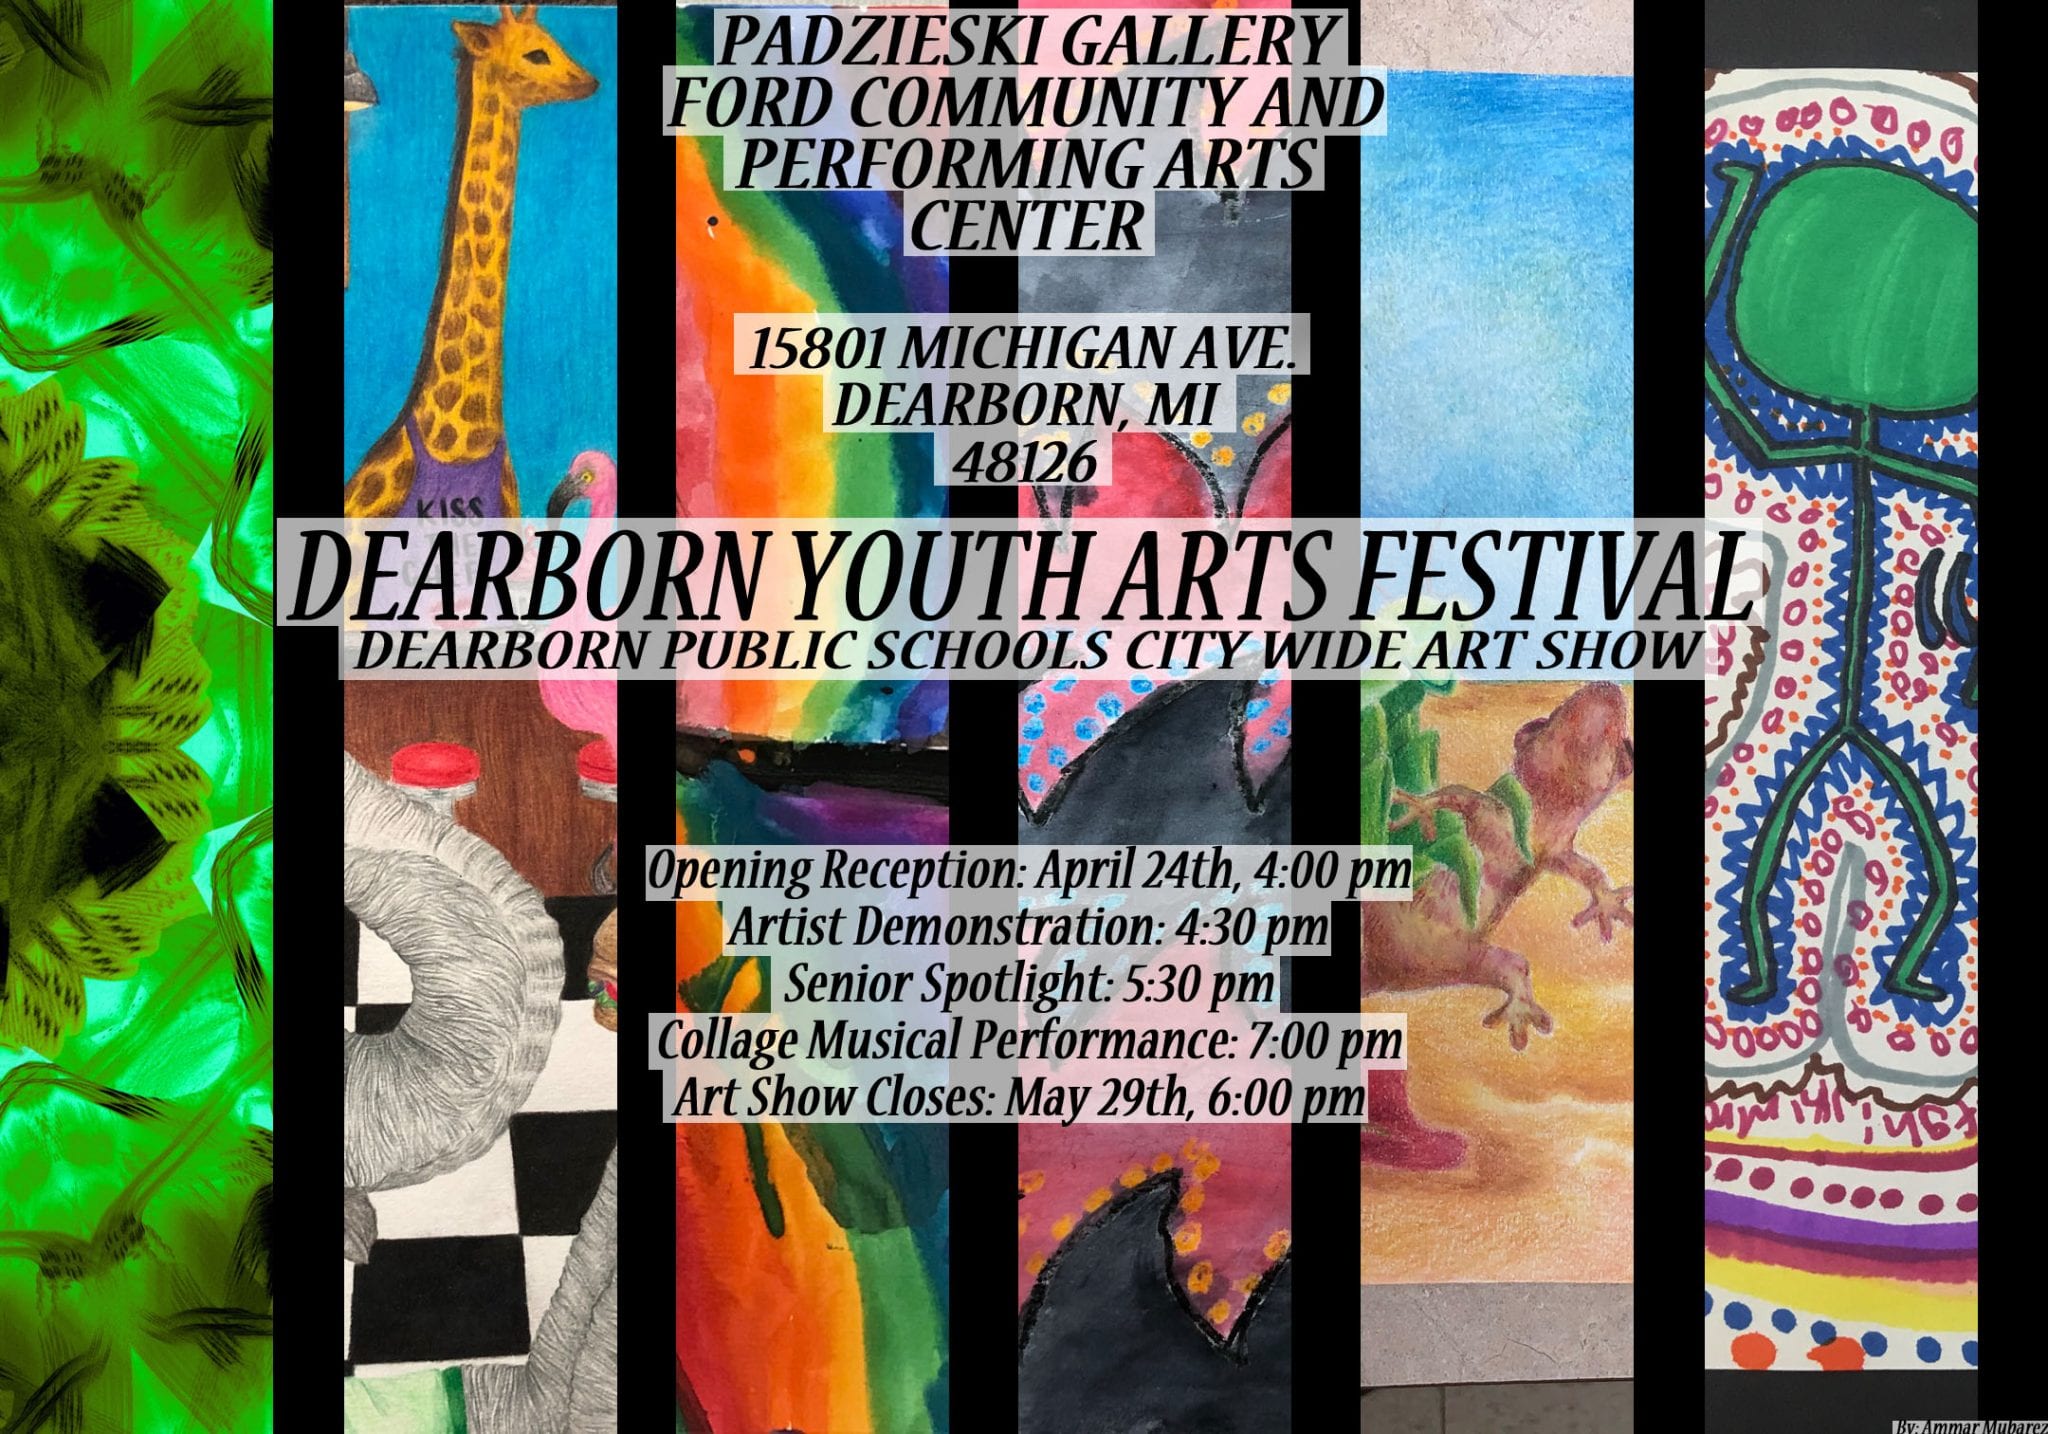 Dearborn Public Schools City Wide Art Show- April 24, 2019 at 4:00 pm